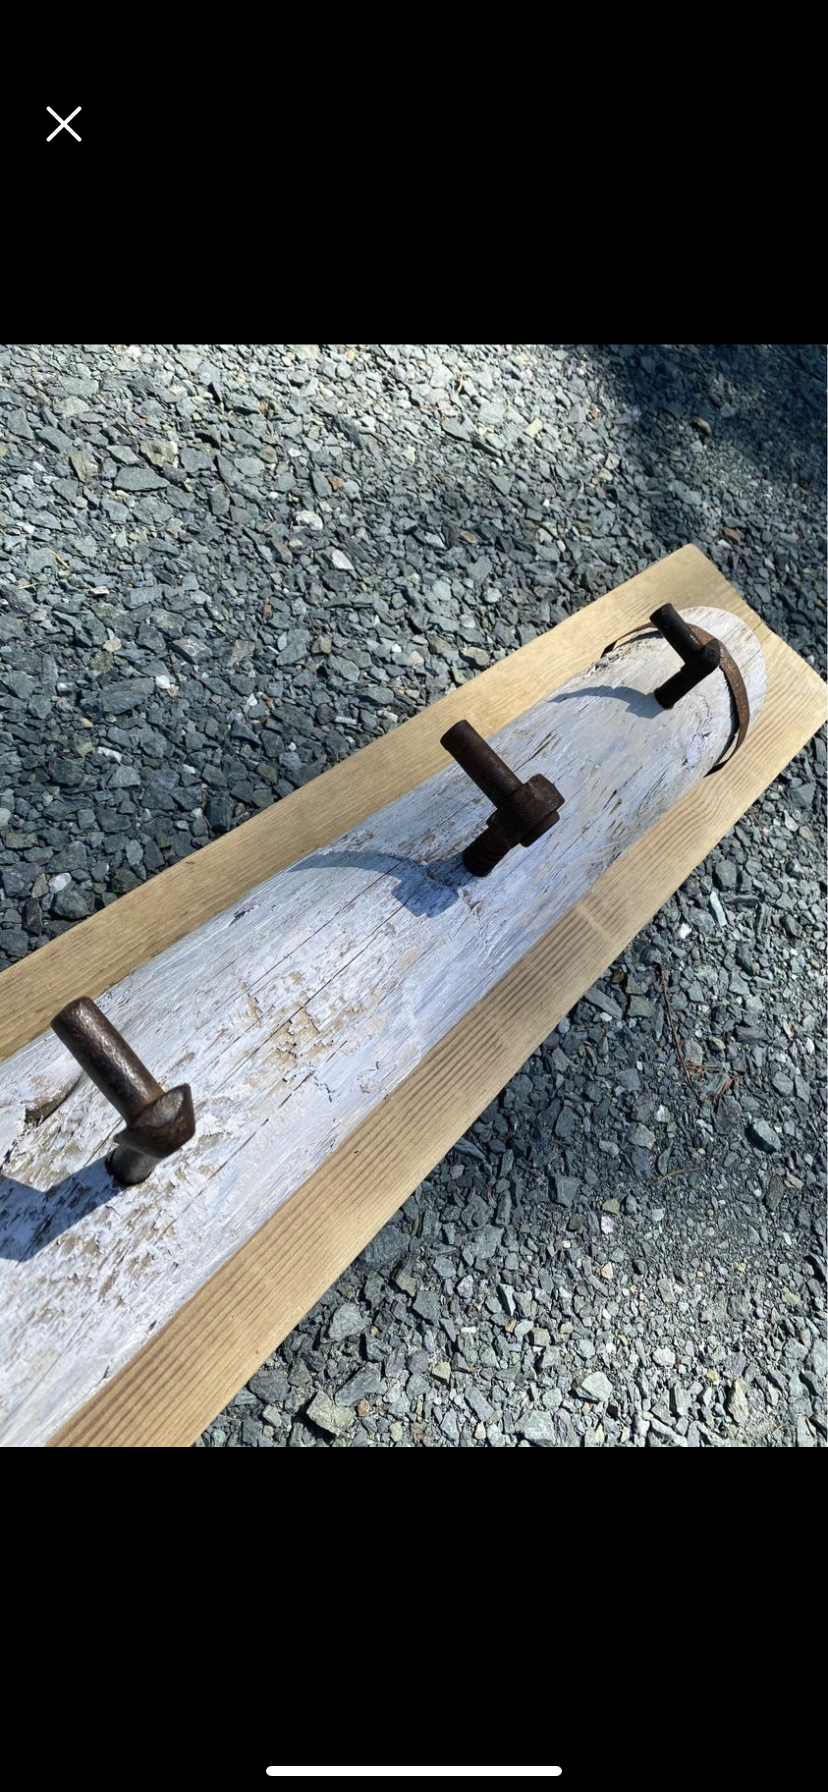 Jon’s Custom Built Barn Wood Coatrack